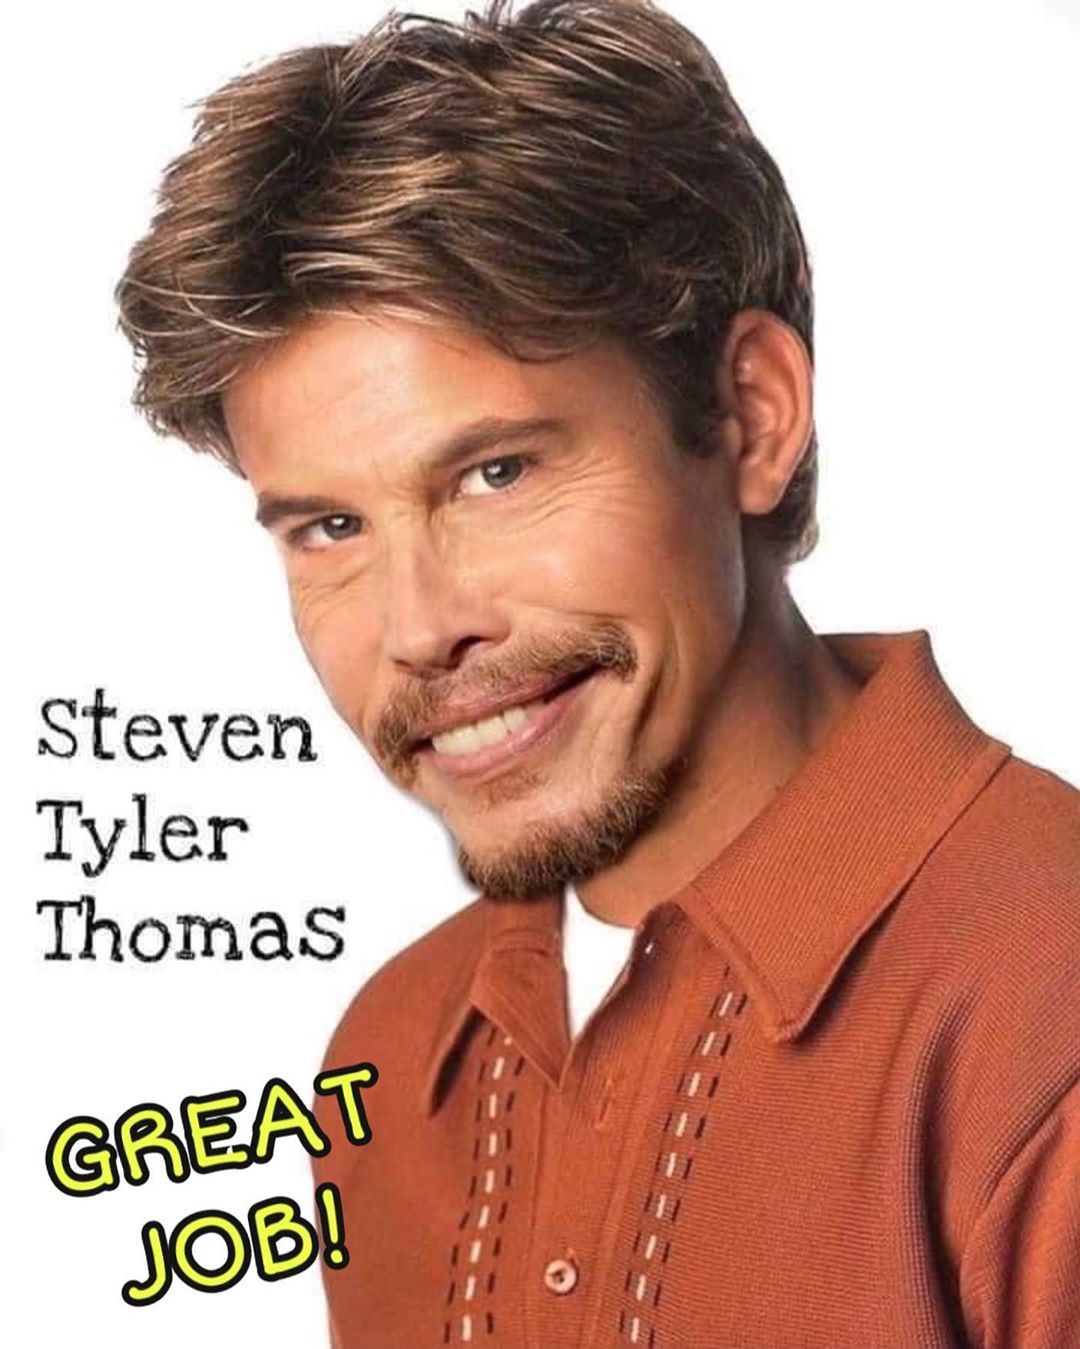 Steven Tyler Thomas Great Job!